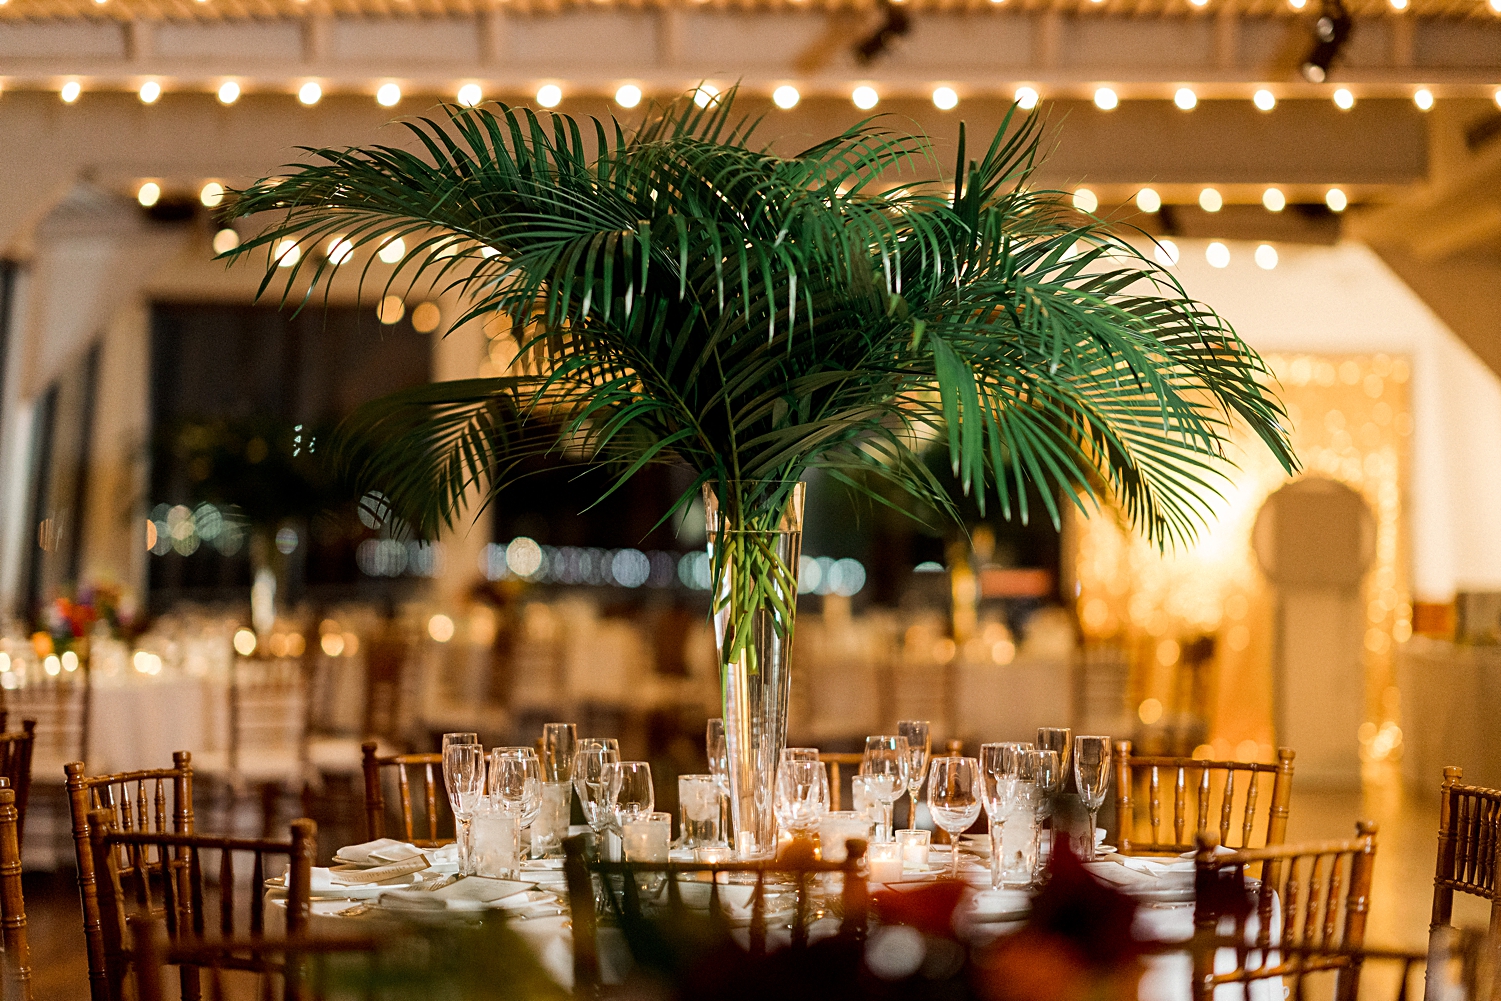 Wedding reception table decor with green fern centerpiece